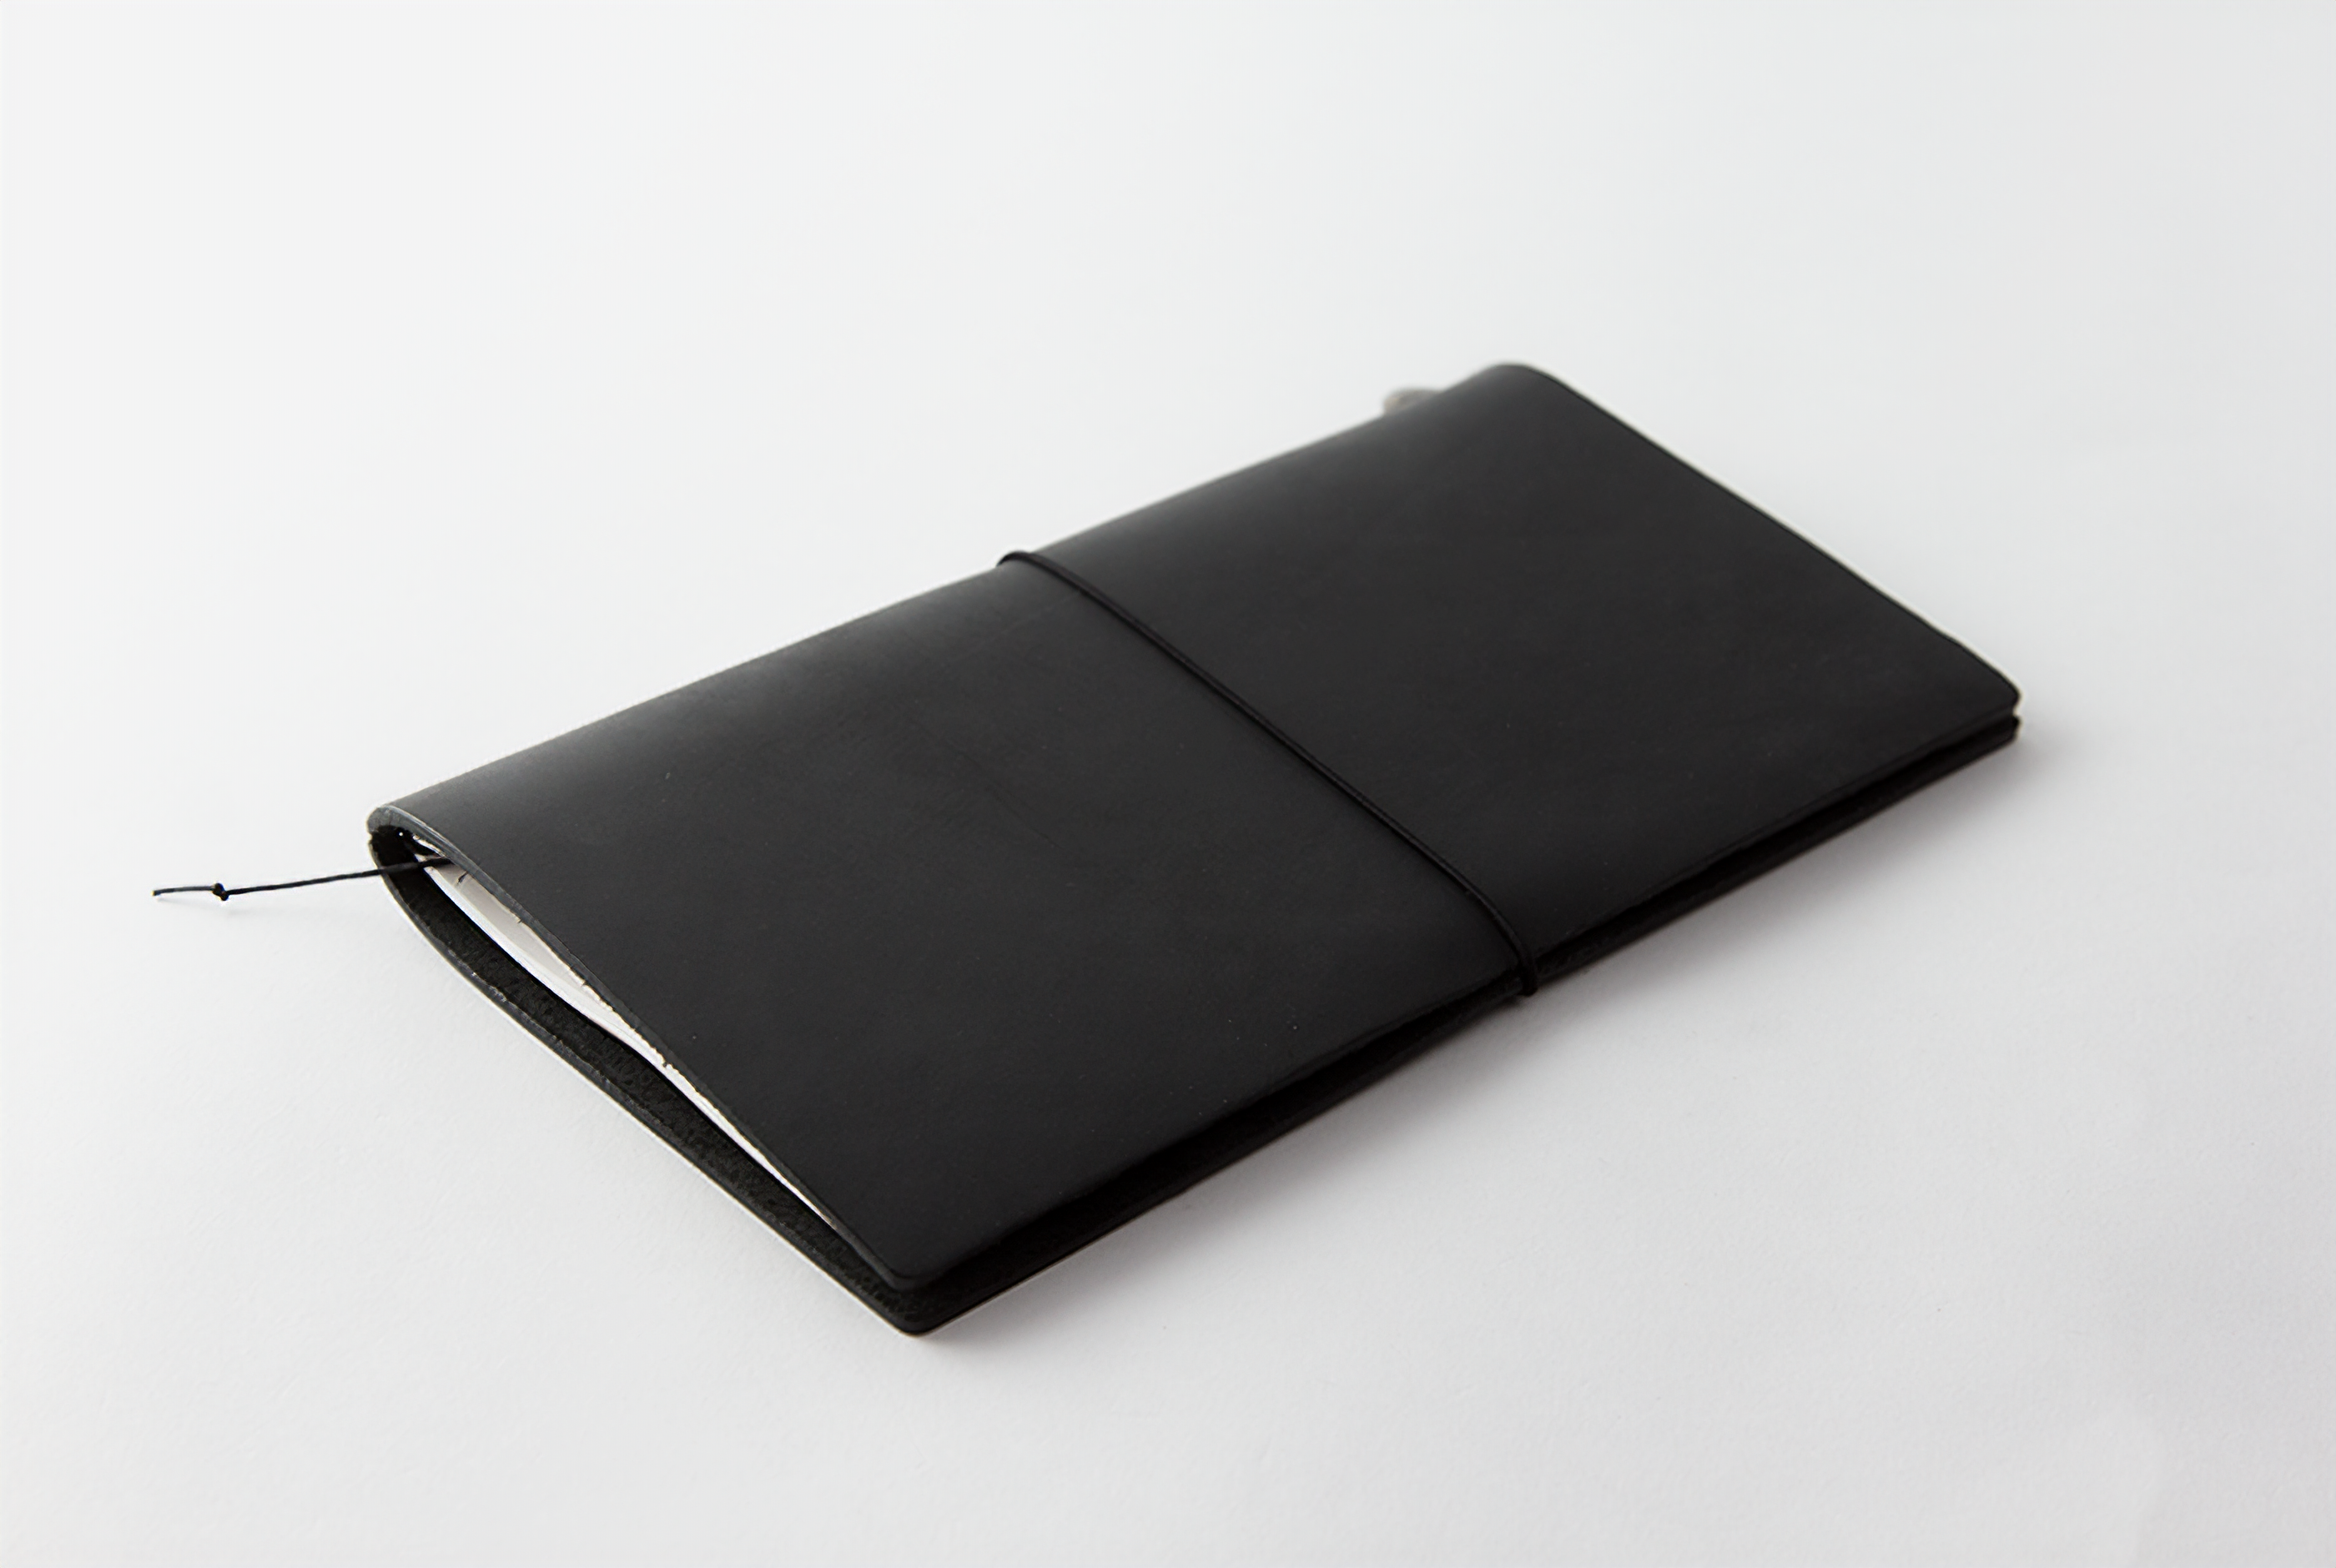 TRAVELER'S notebook - Black